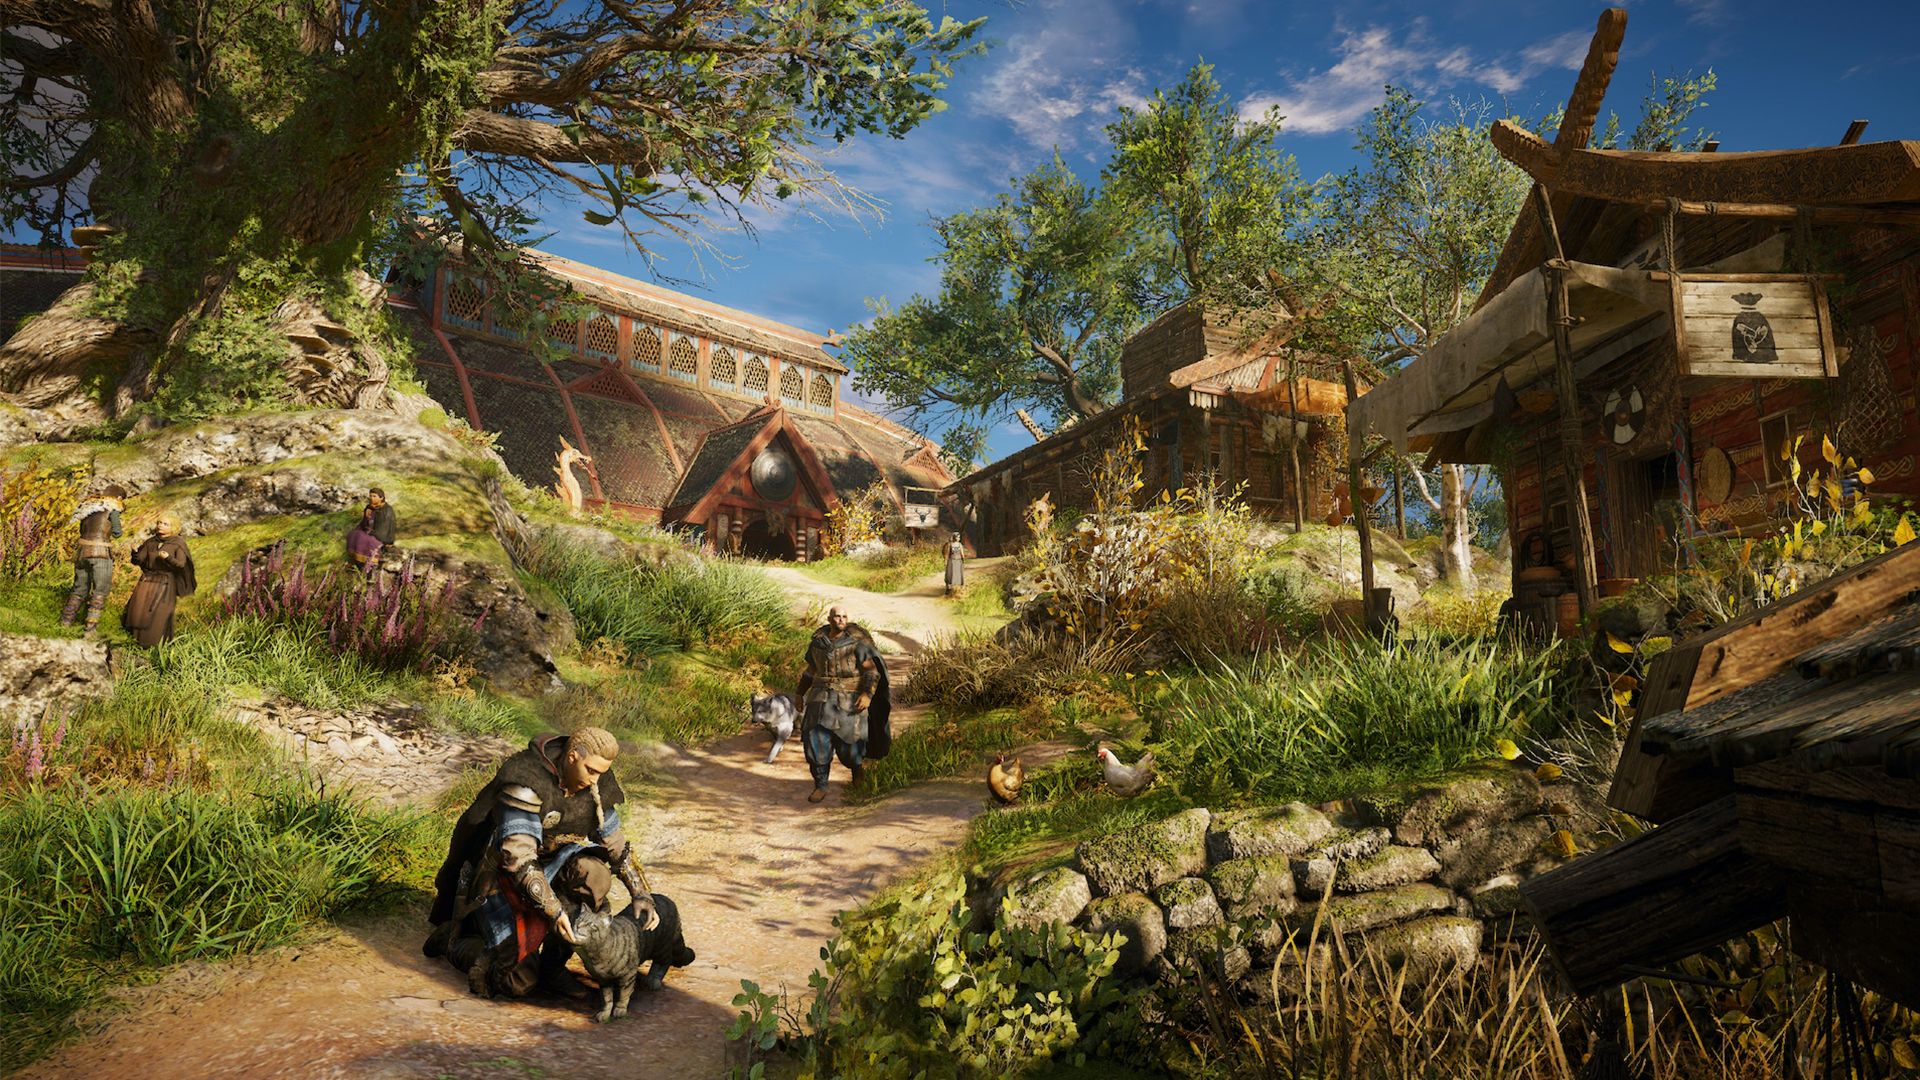 Assassin's Creed Jade : le jeu en open world sur mobile accuse une lourde fuite de gameplay...